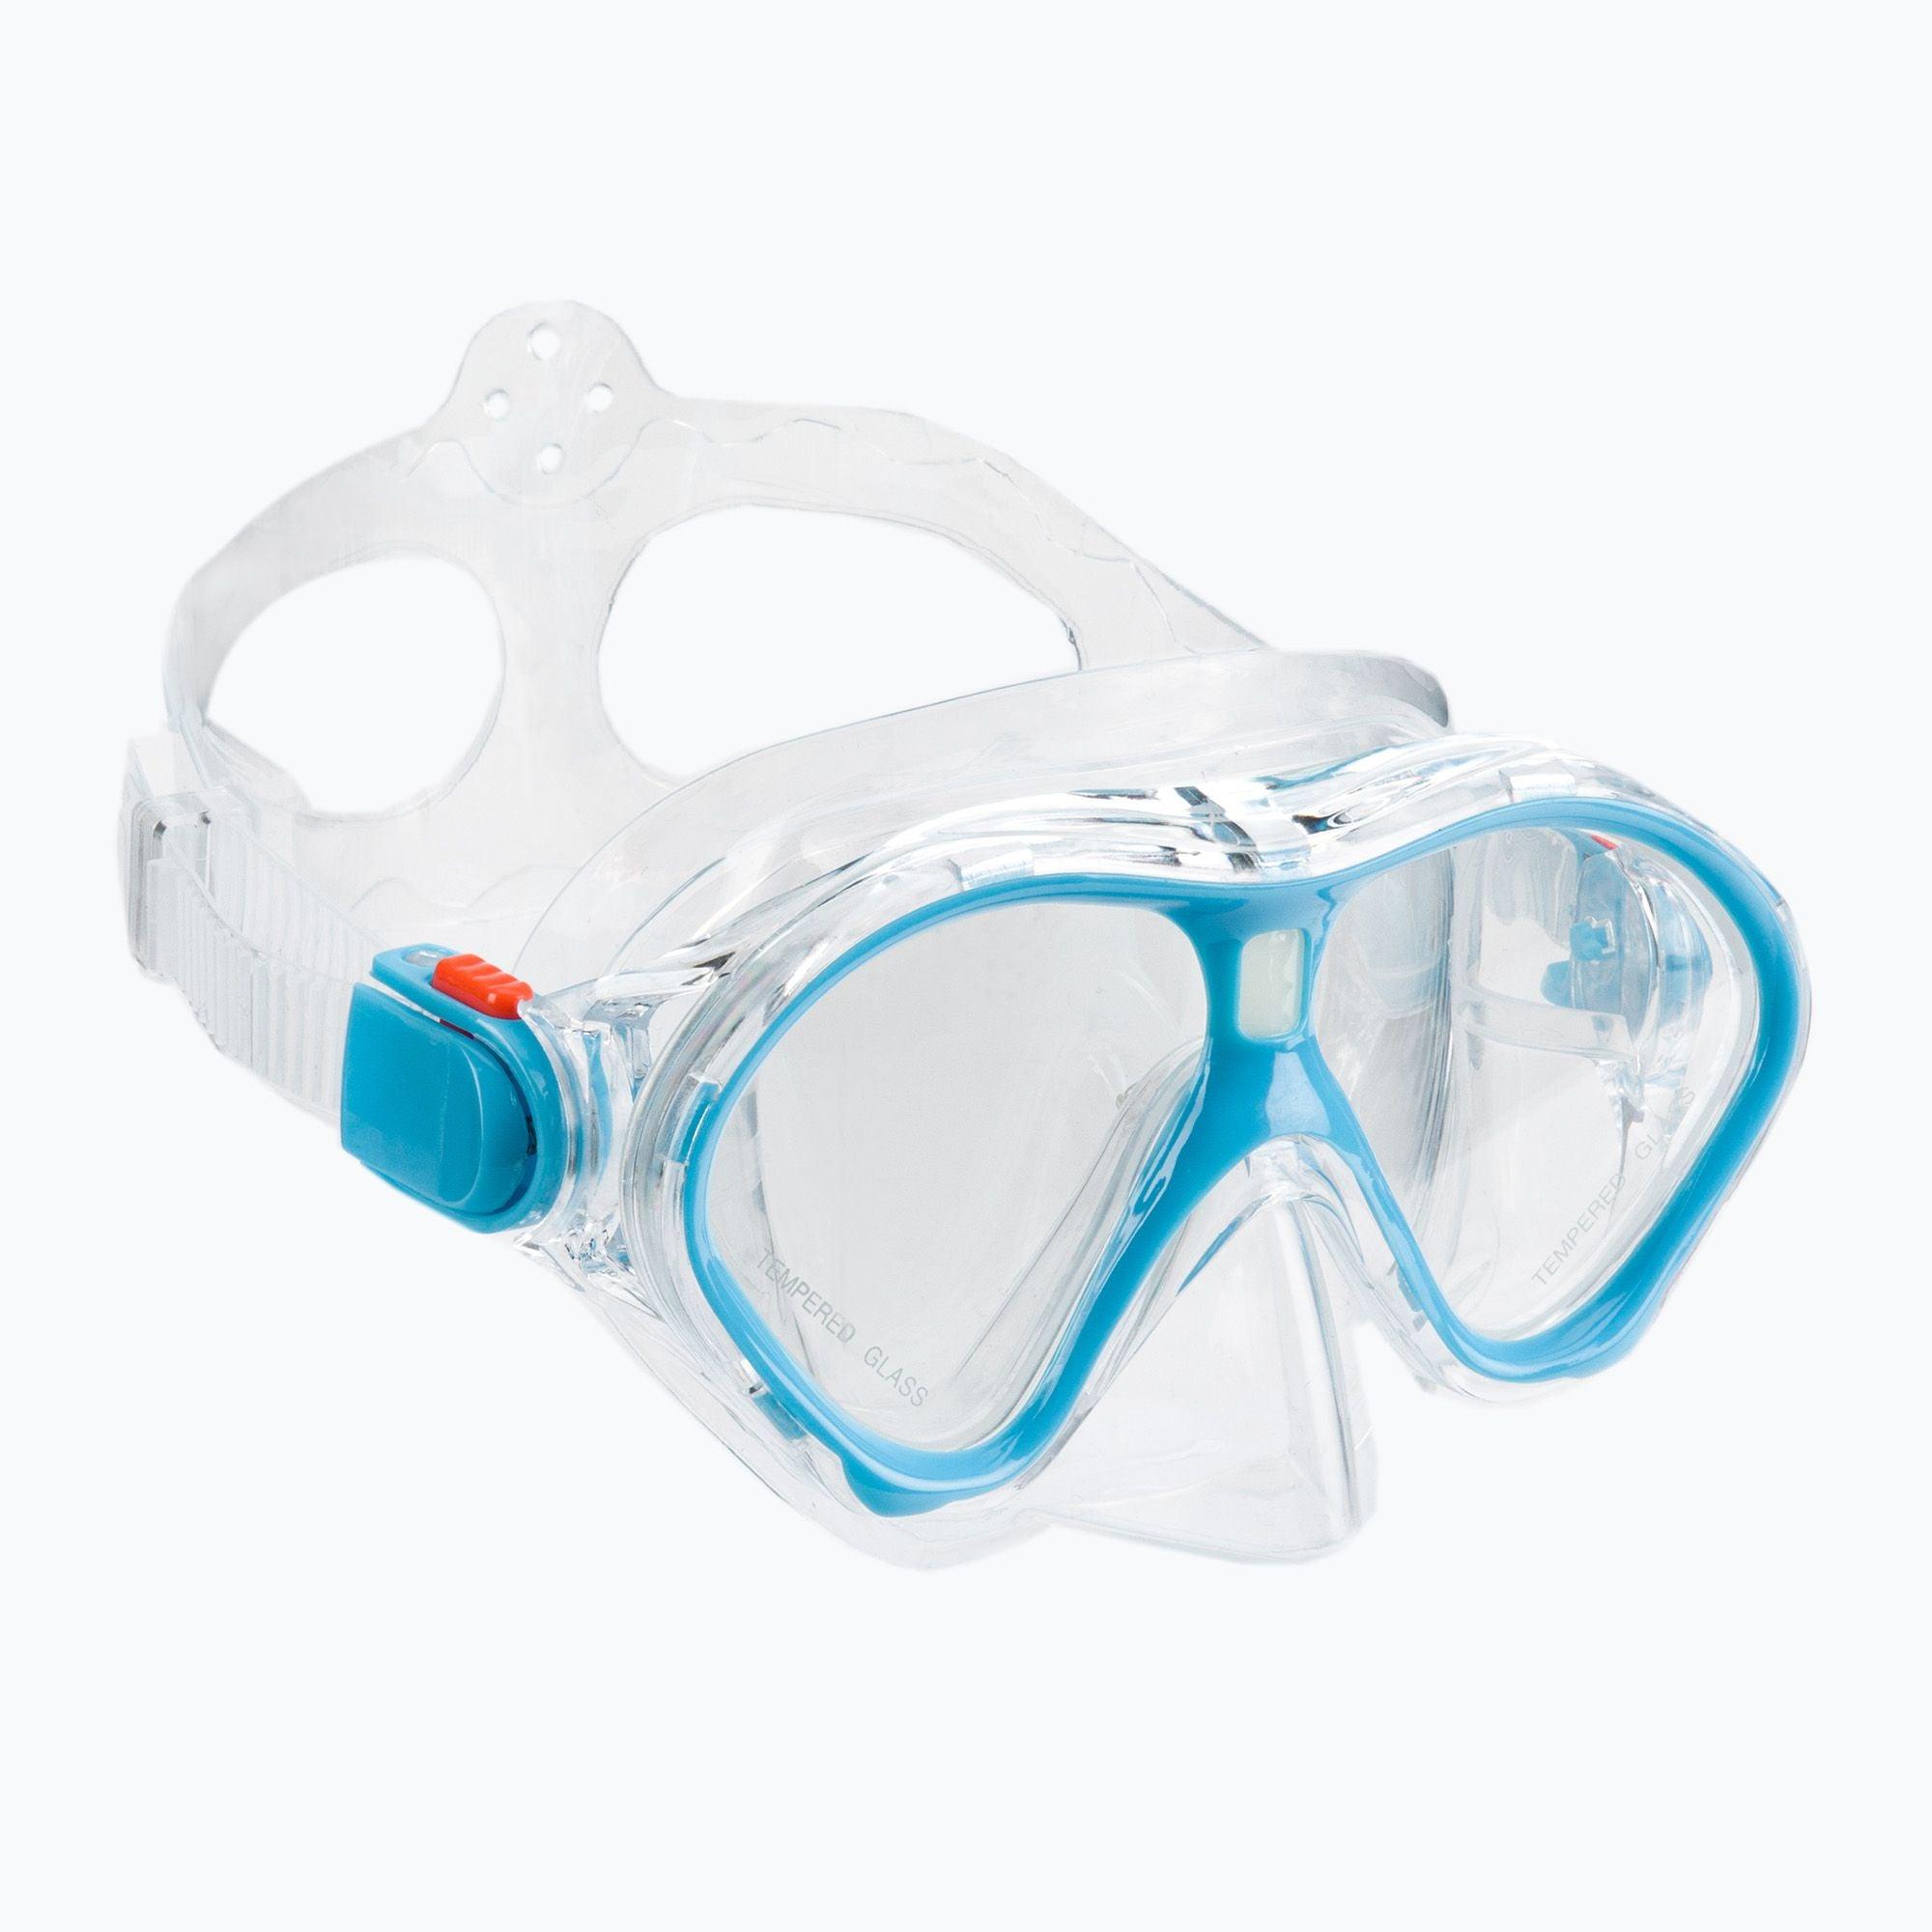 Aquastic: Mask and Snorkel pentru copii